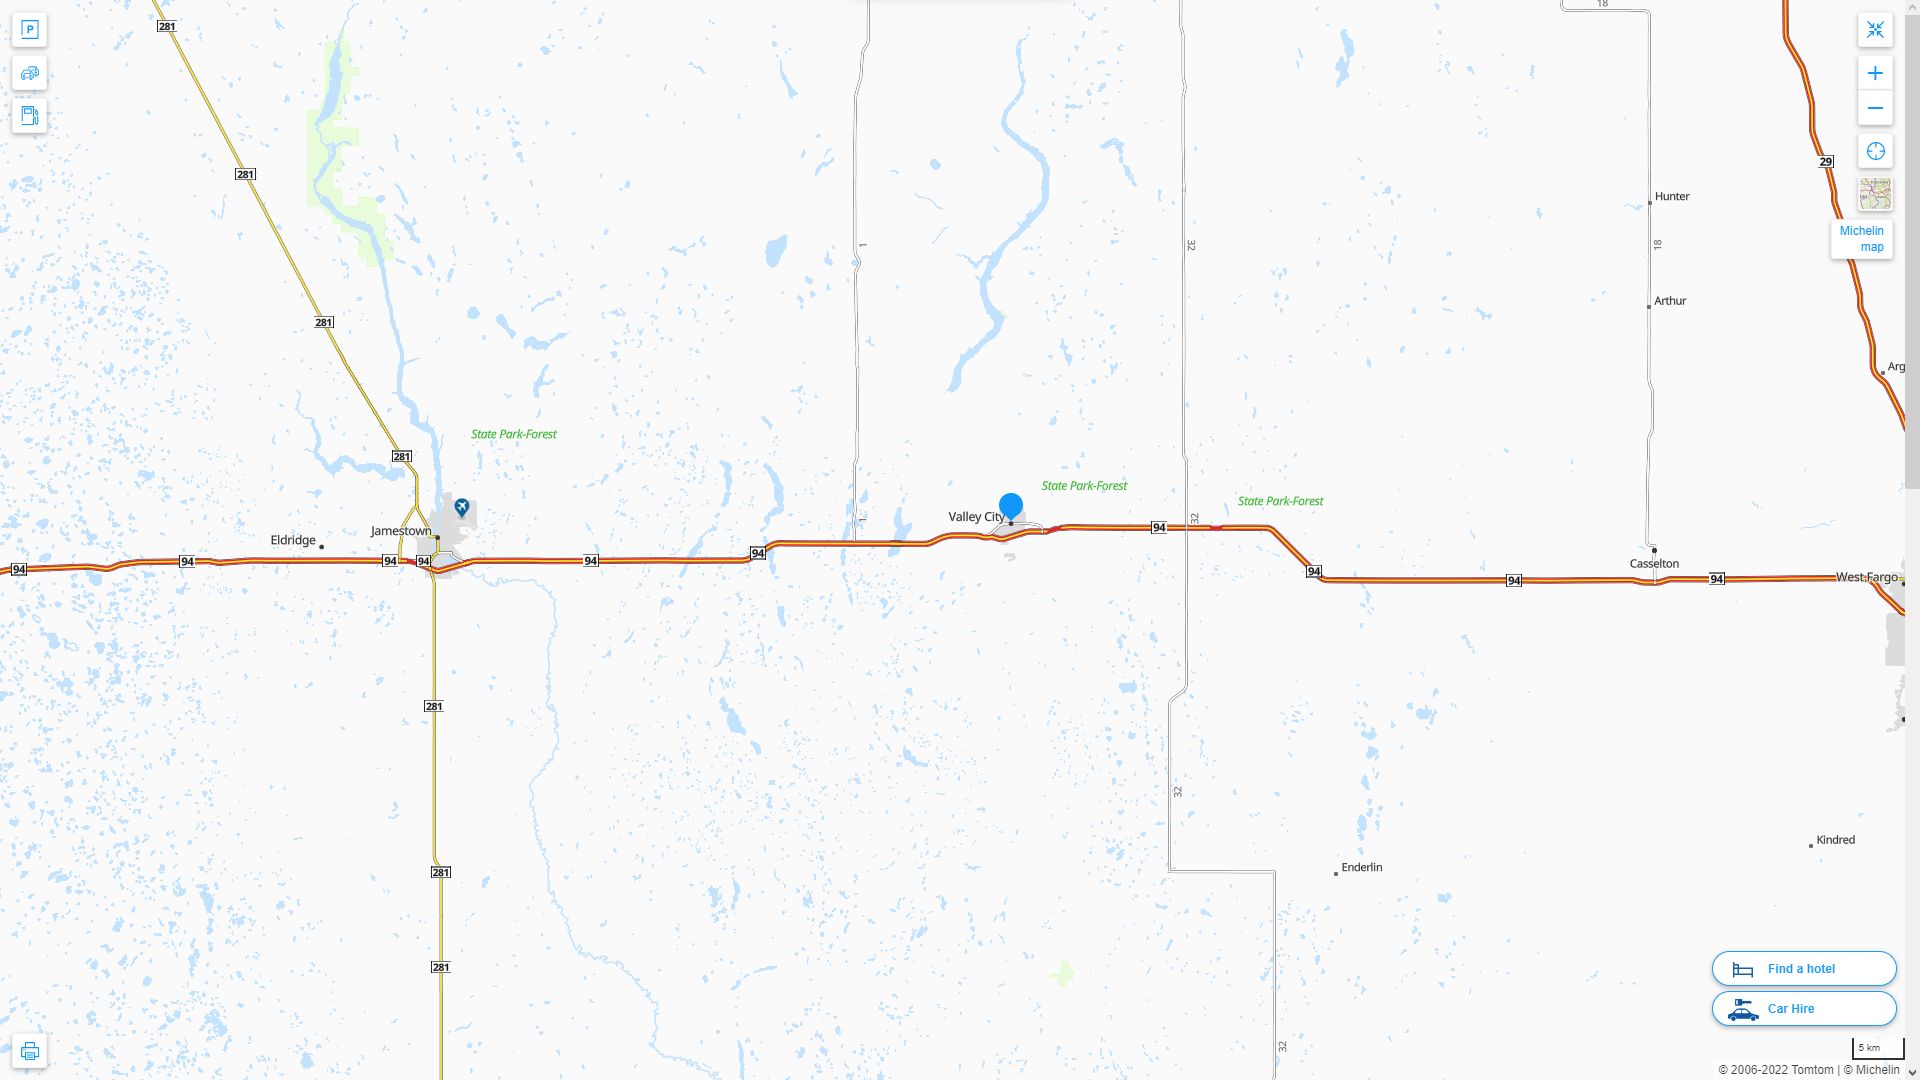 Valley City North Dakota Highway and Road Map